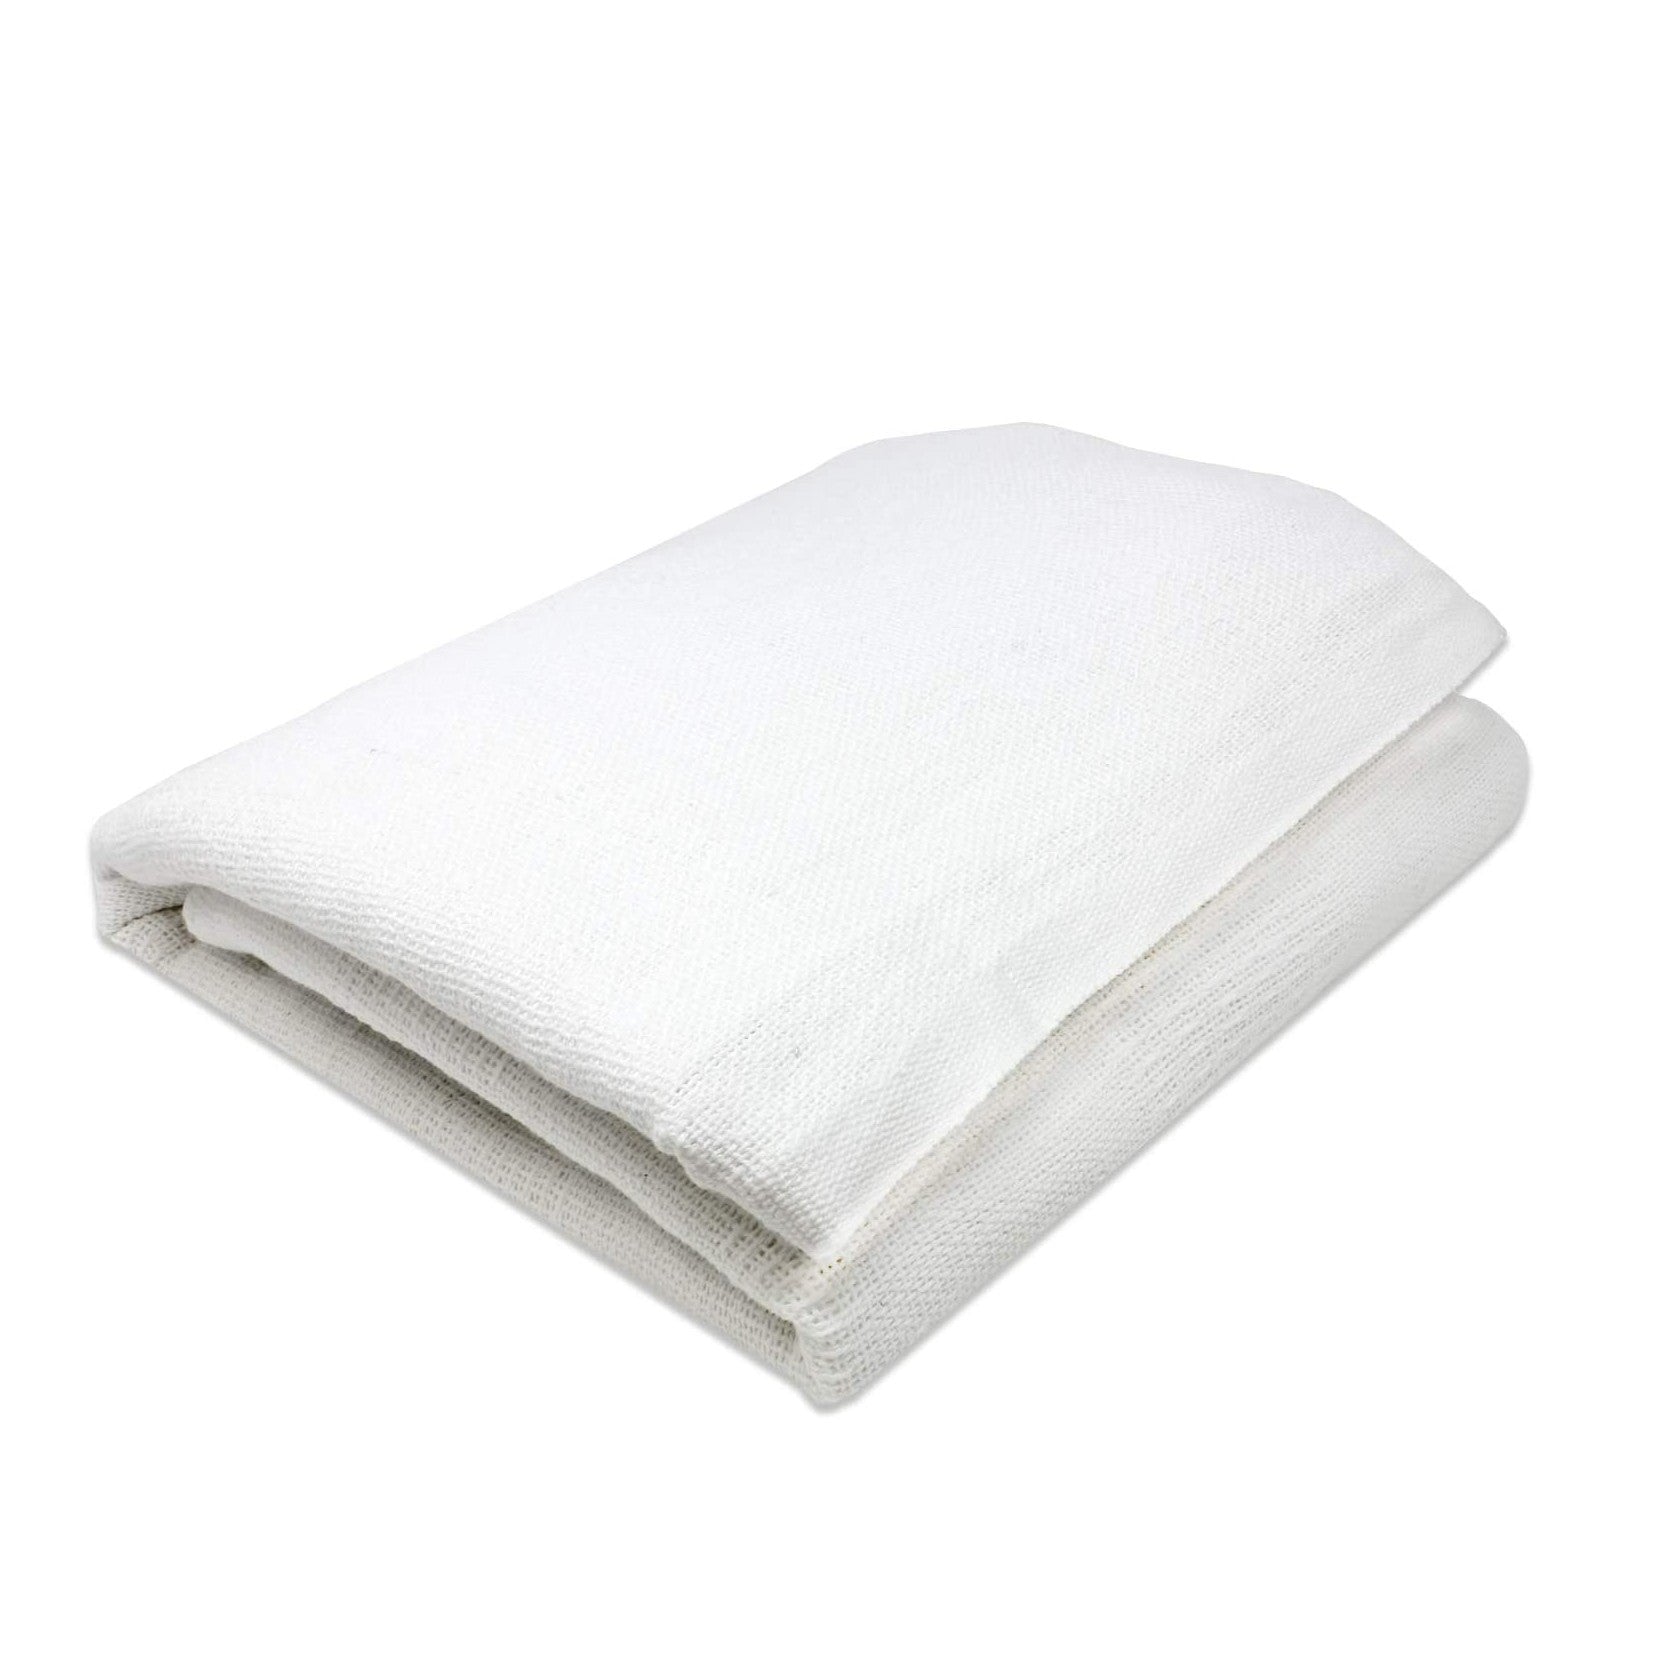 White Cotton Thermal Blanket, 66” x 90”